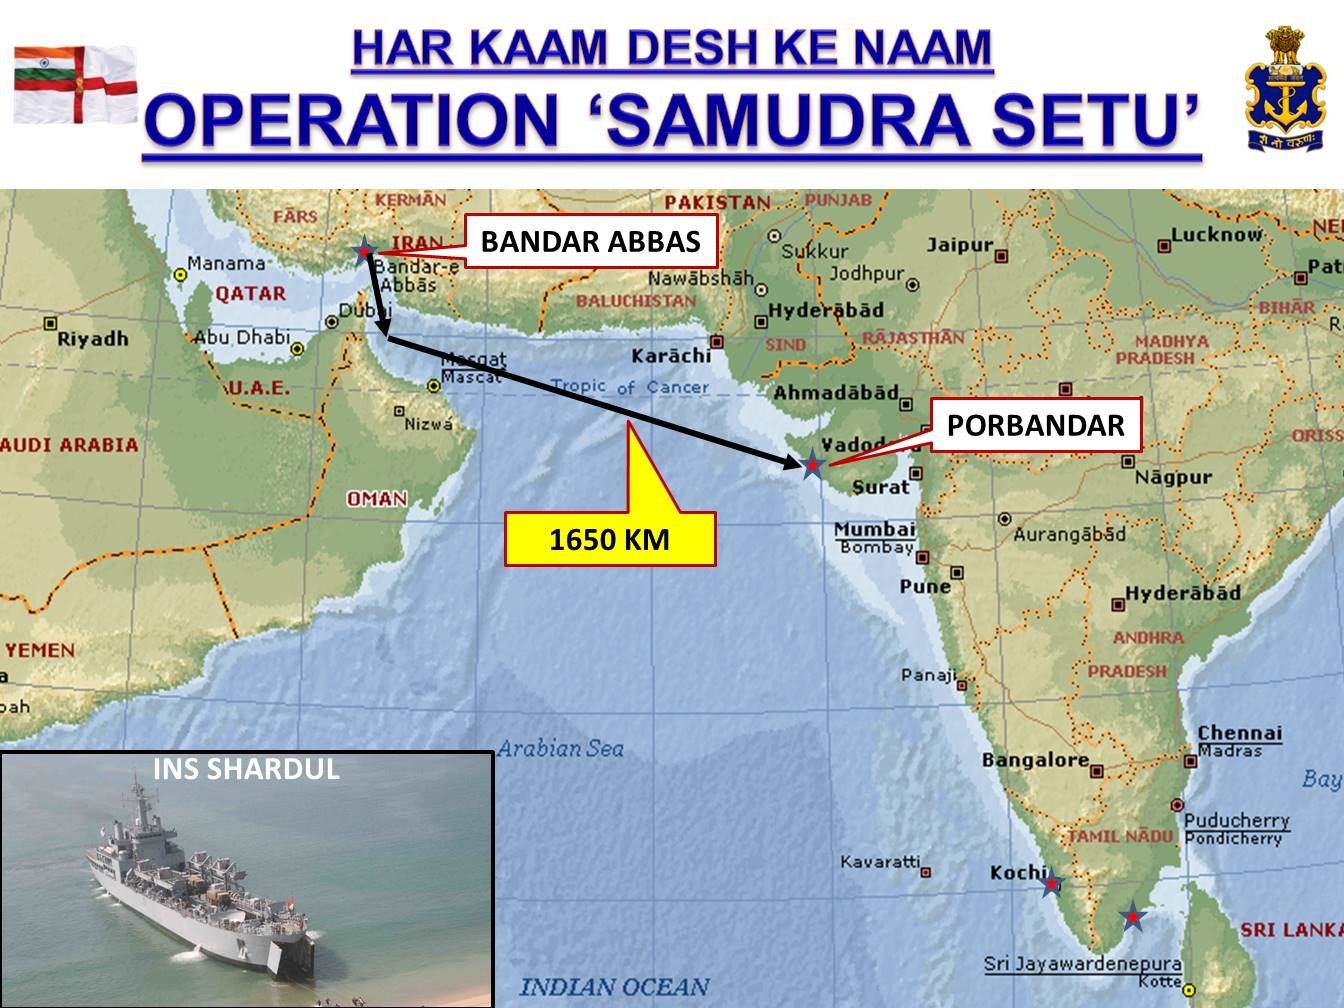 Indian Navy Commences evacuation of citizens from Islamic Republic of Iran - “SAMUDRA SETU”